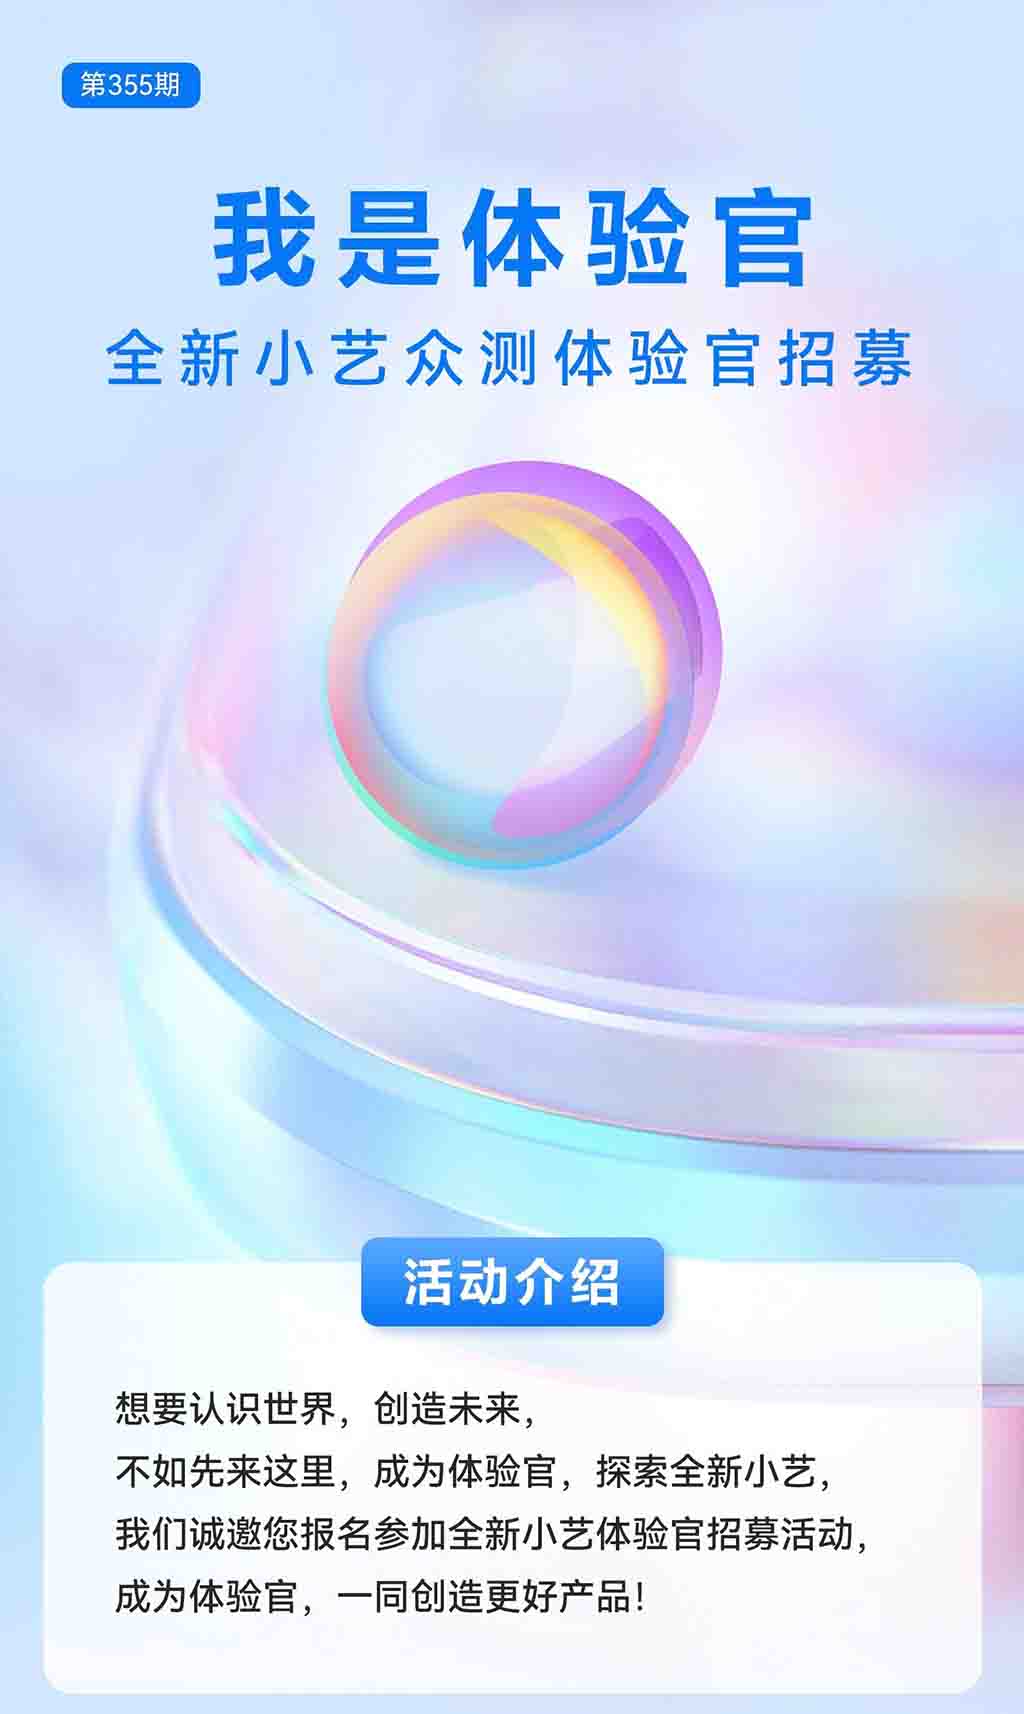 Huawei celia beta test